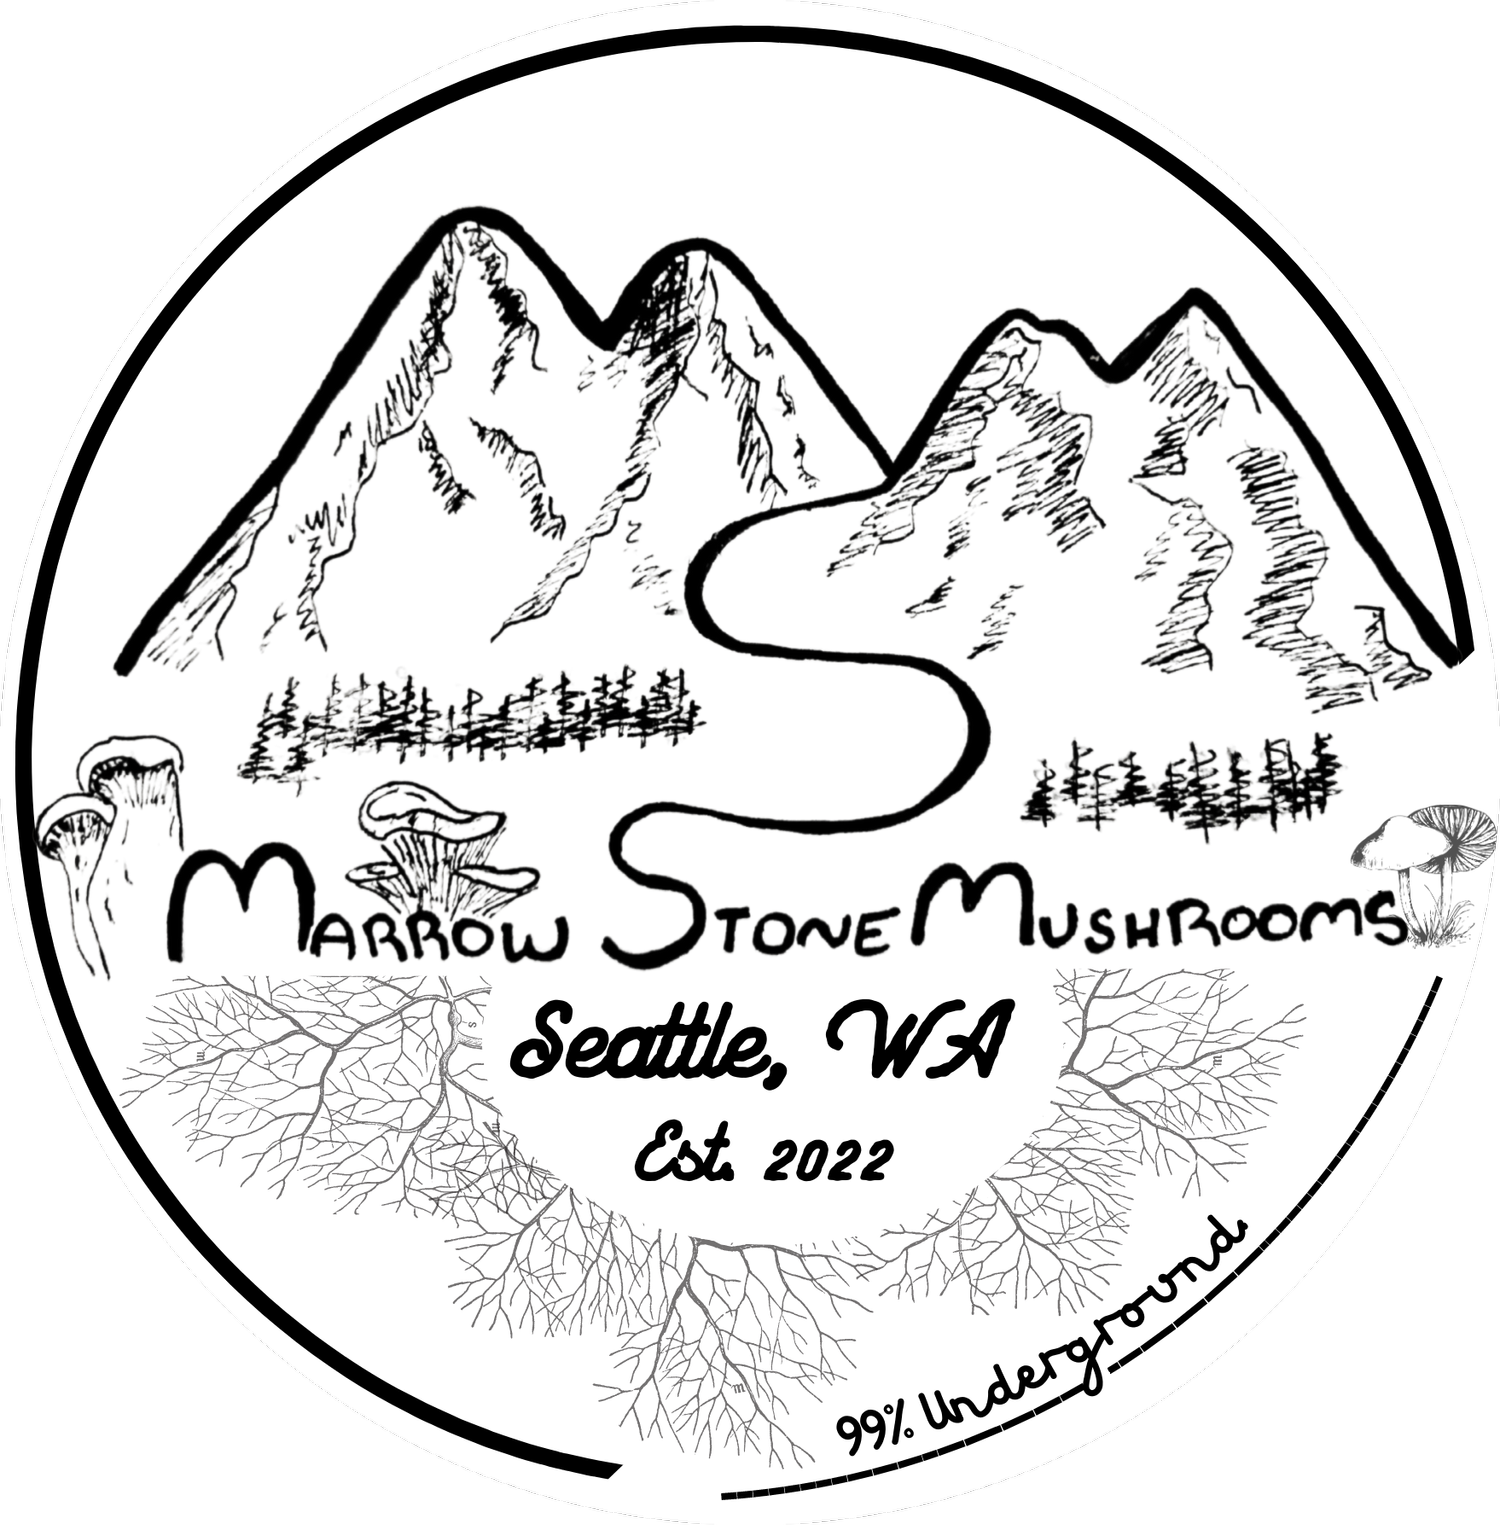 MarrowStone Mushrooms